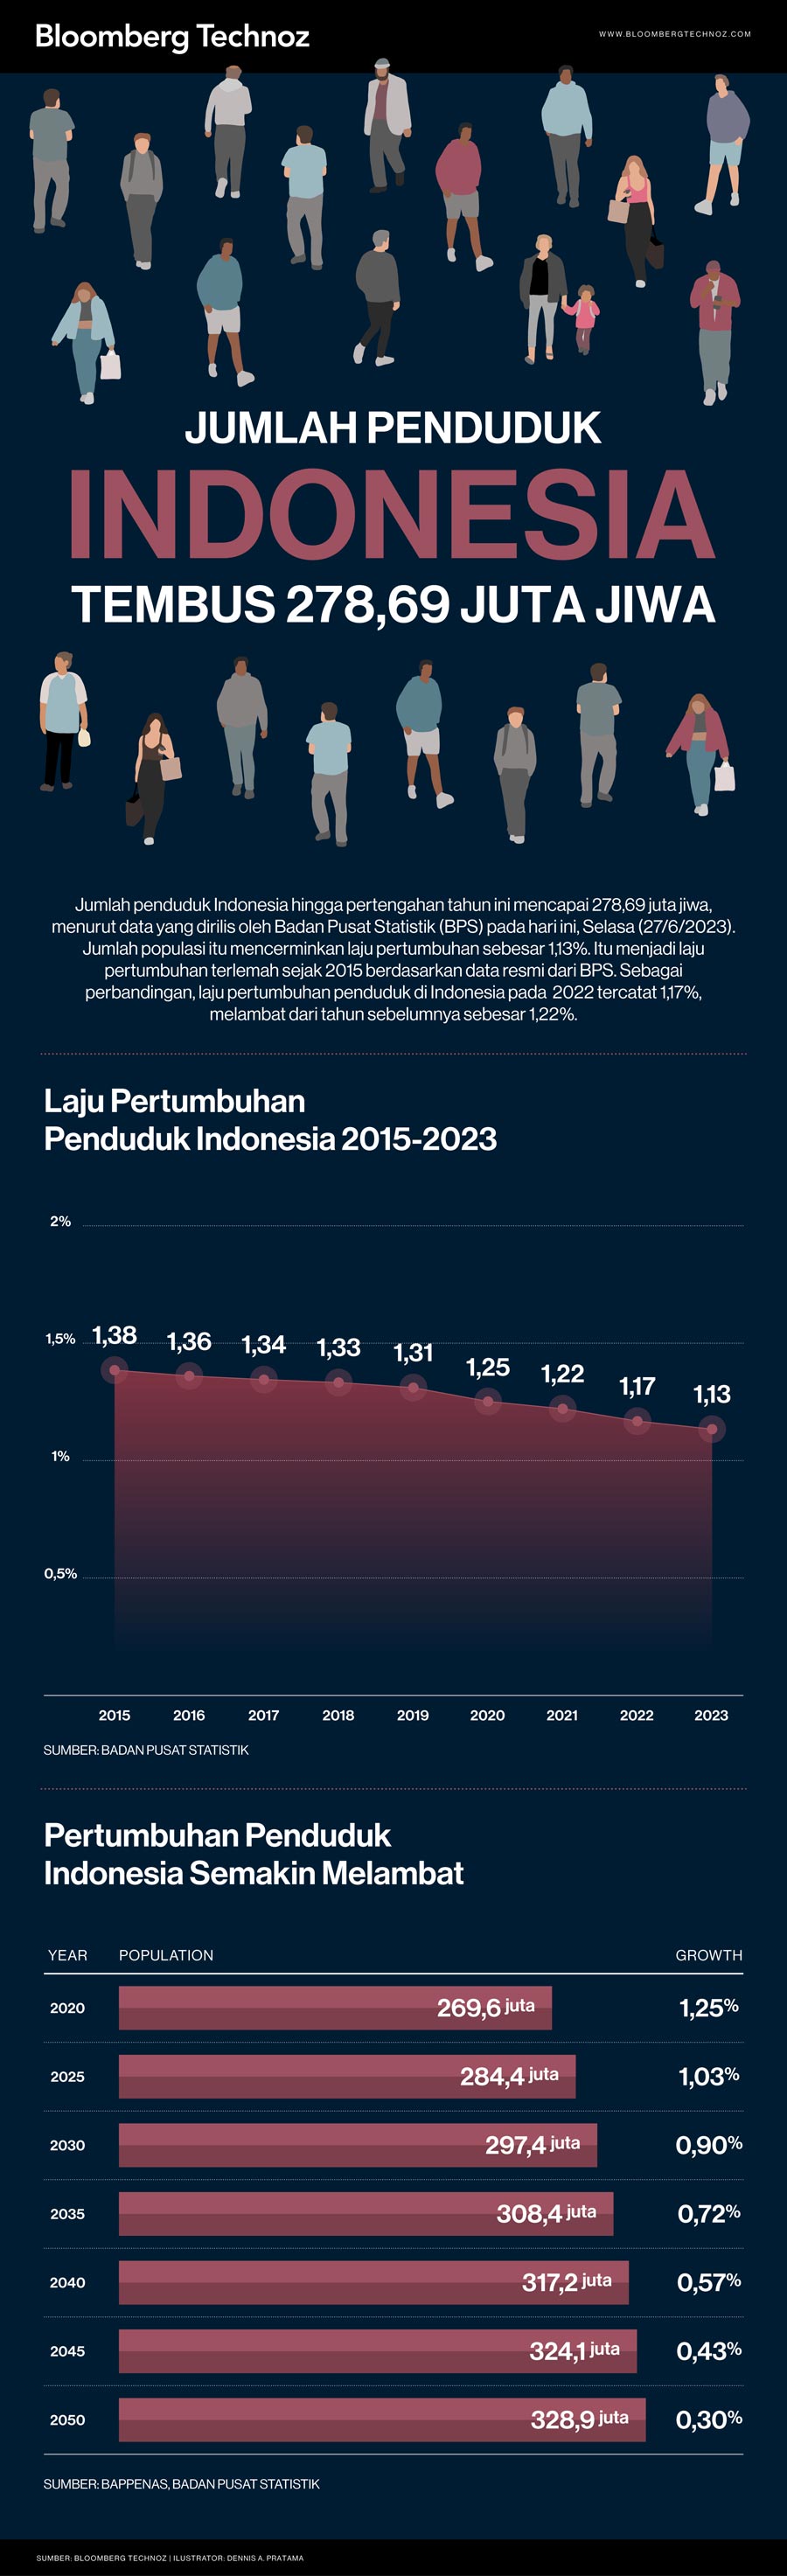 Jumlah Penduduk Indonesia Tembus 278,69 Juta Jiwa (Infografis/Bloomberg Technoz)